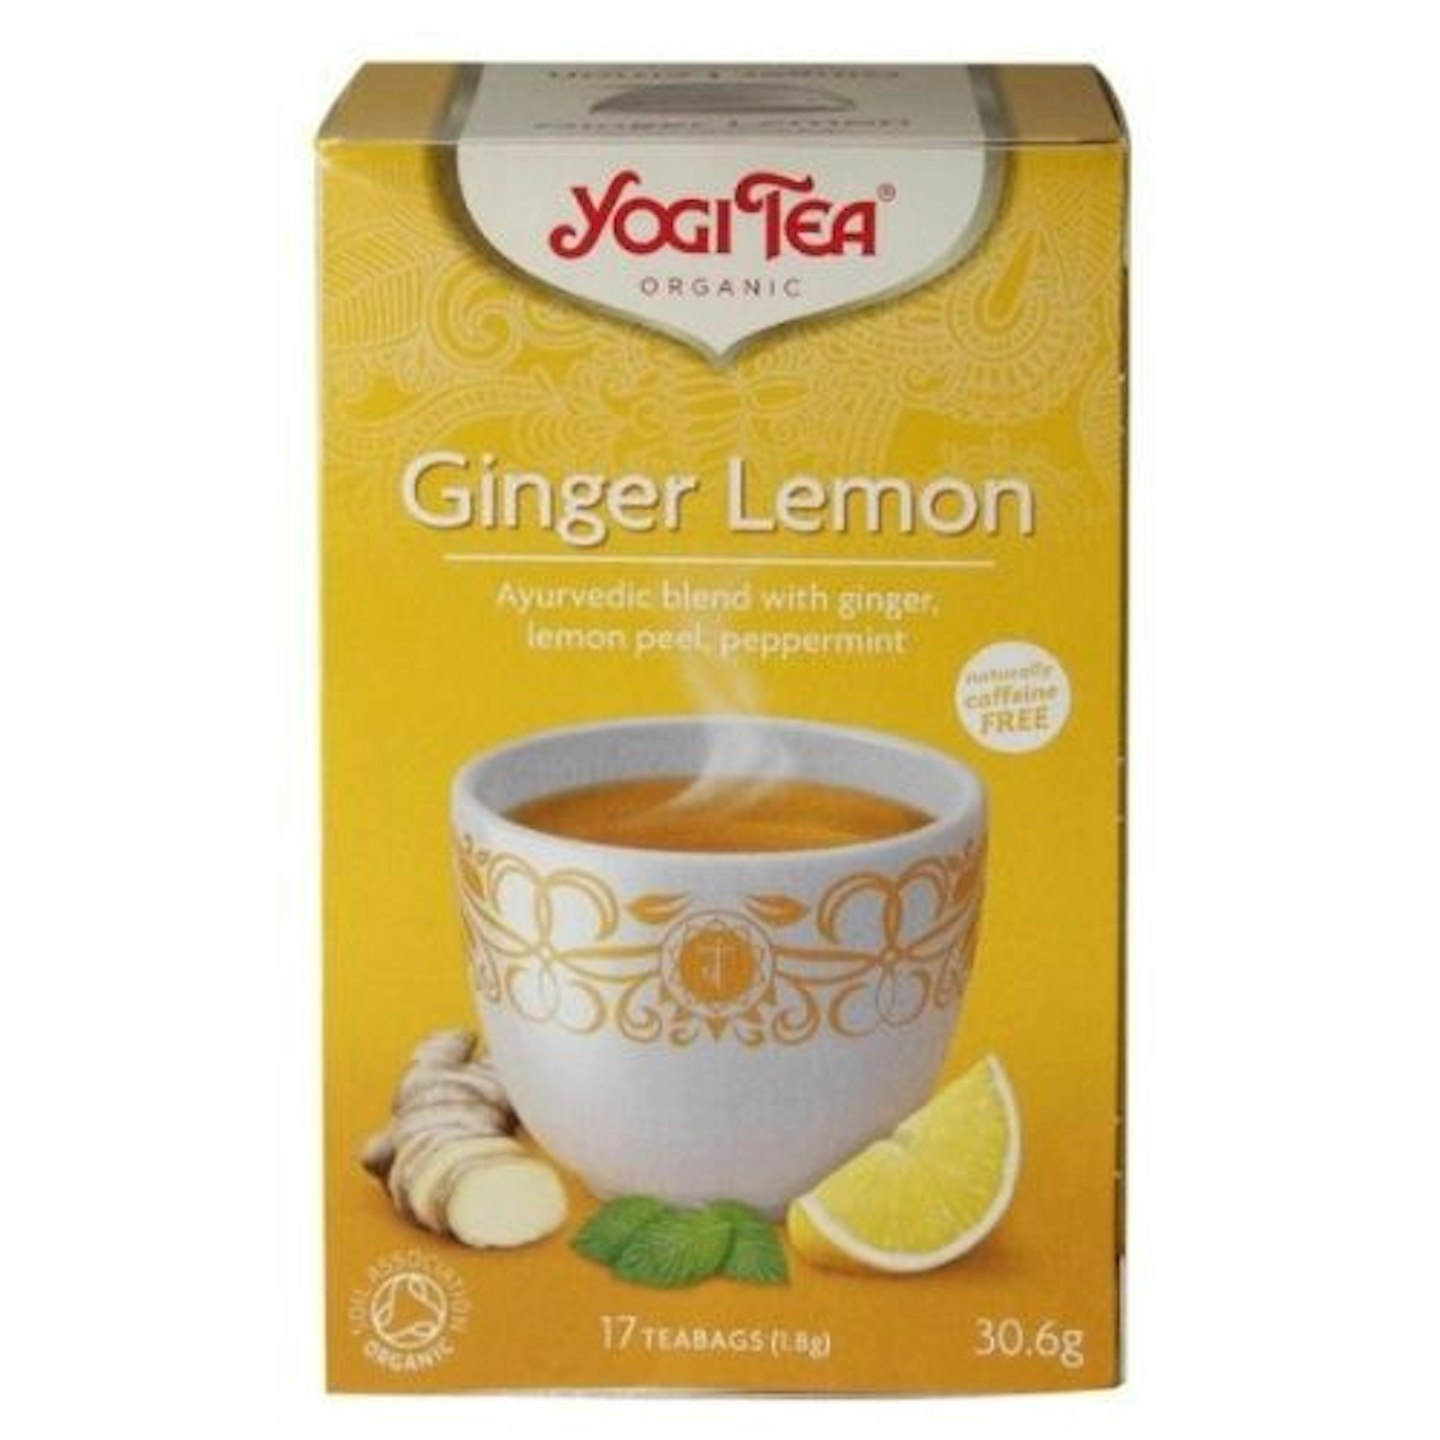 Yogi Tea Lemon Ginger Tea